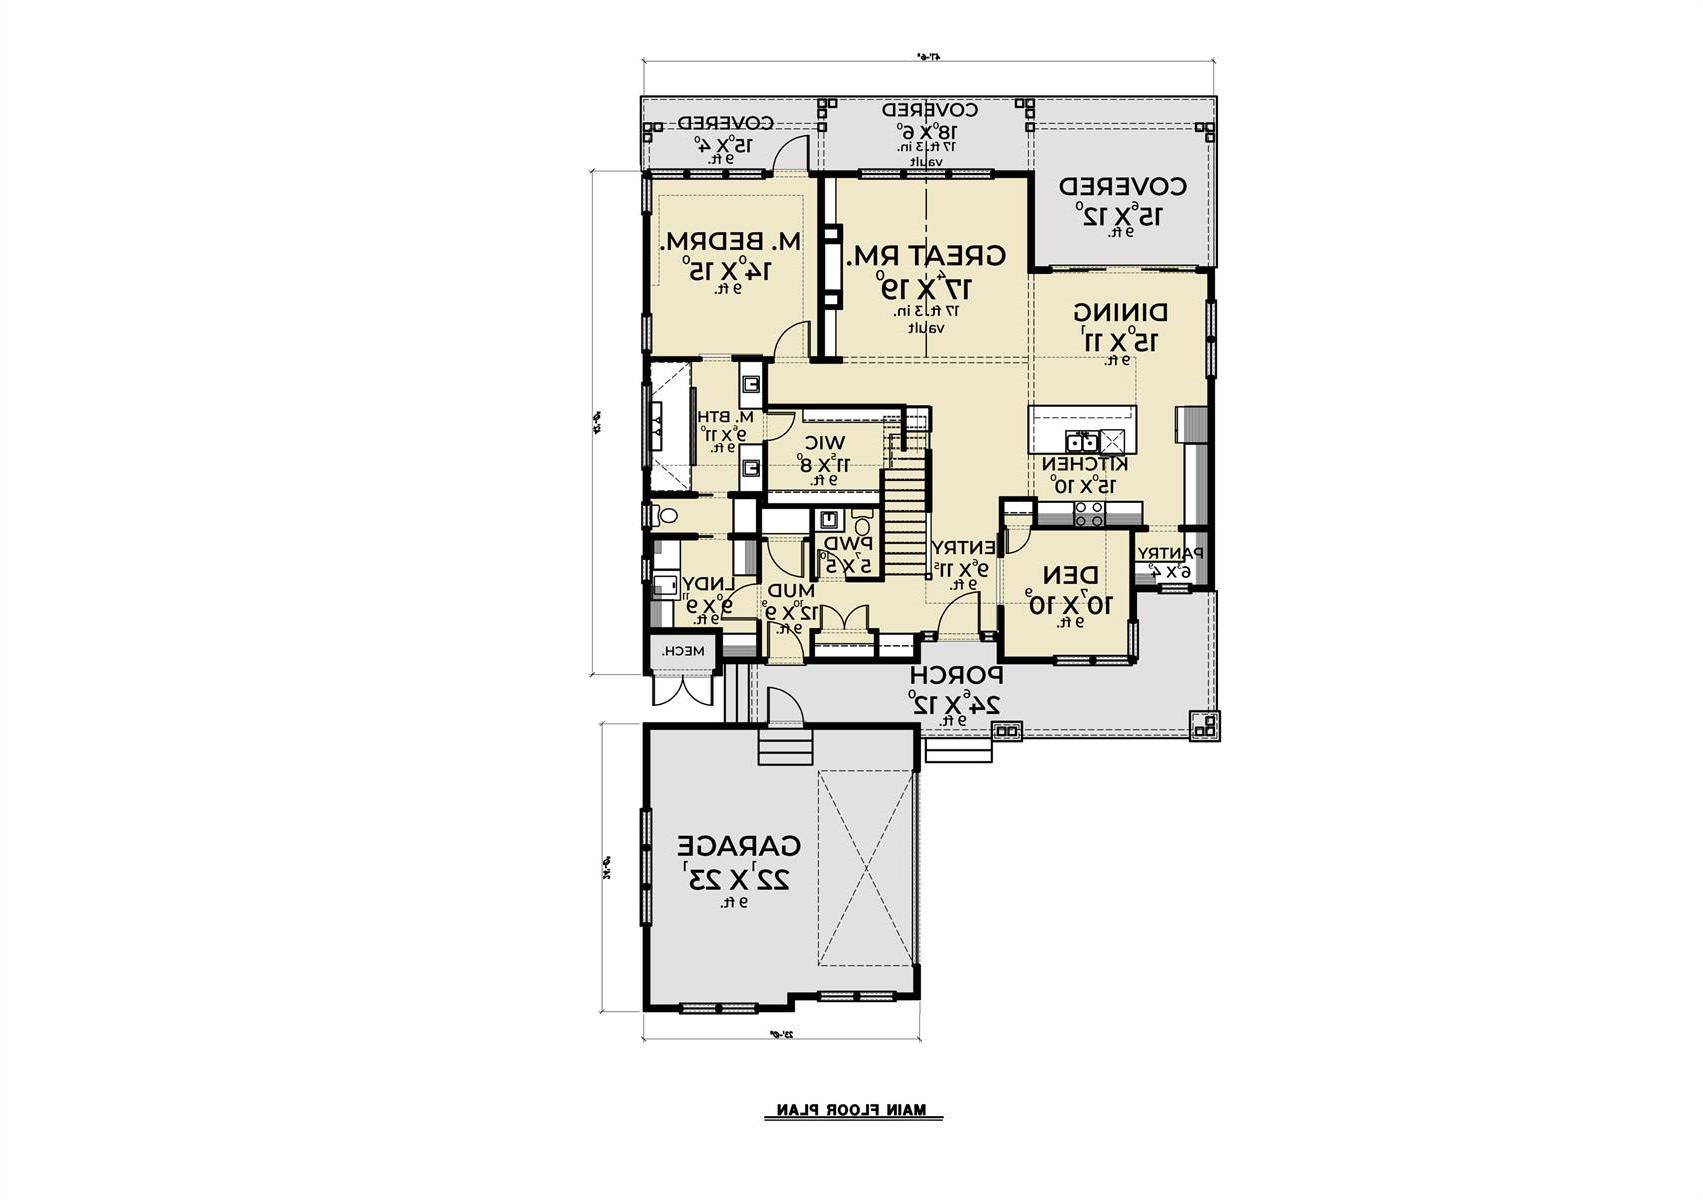 1st Floor image of Craftsman 392 House Plan